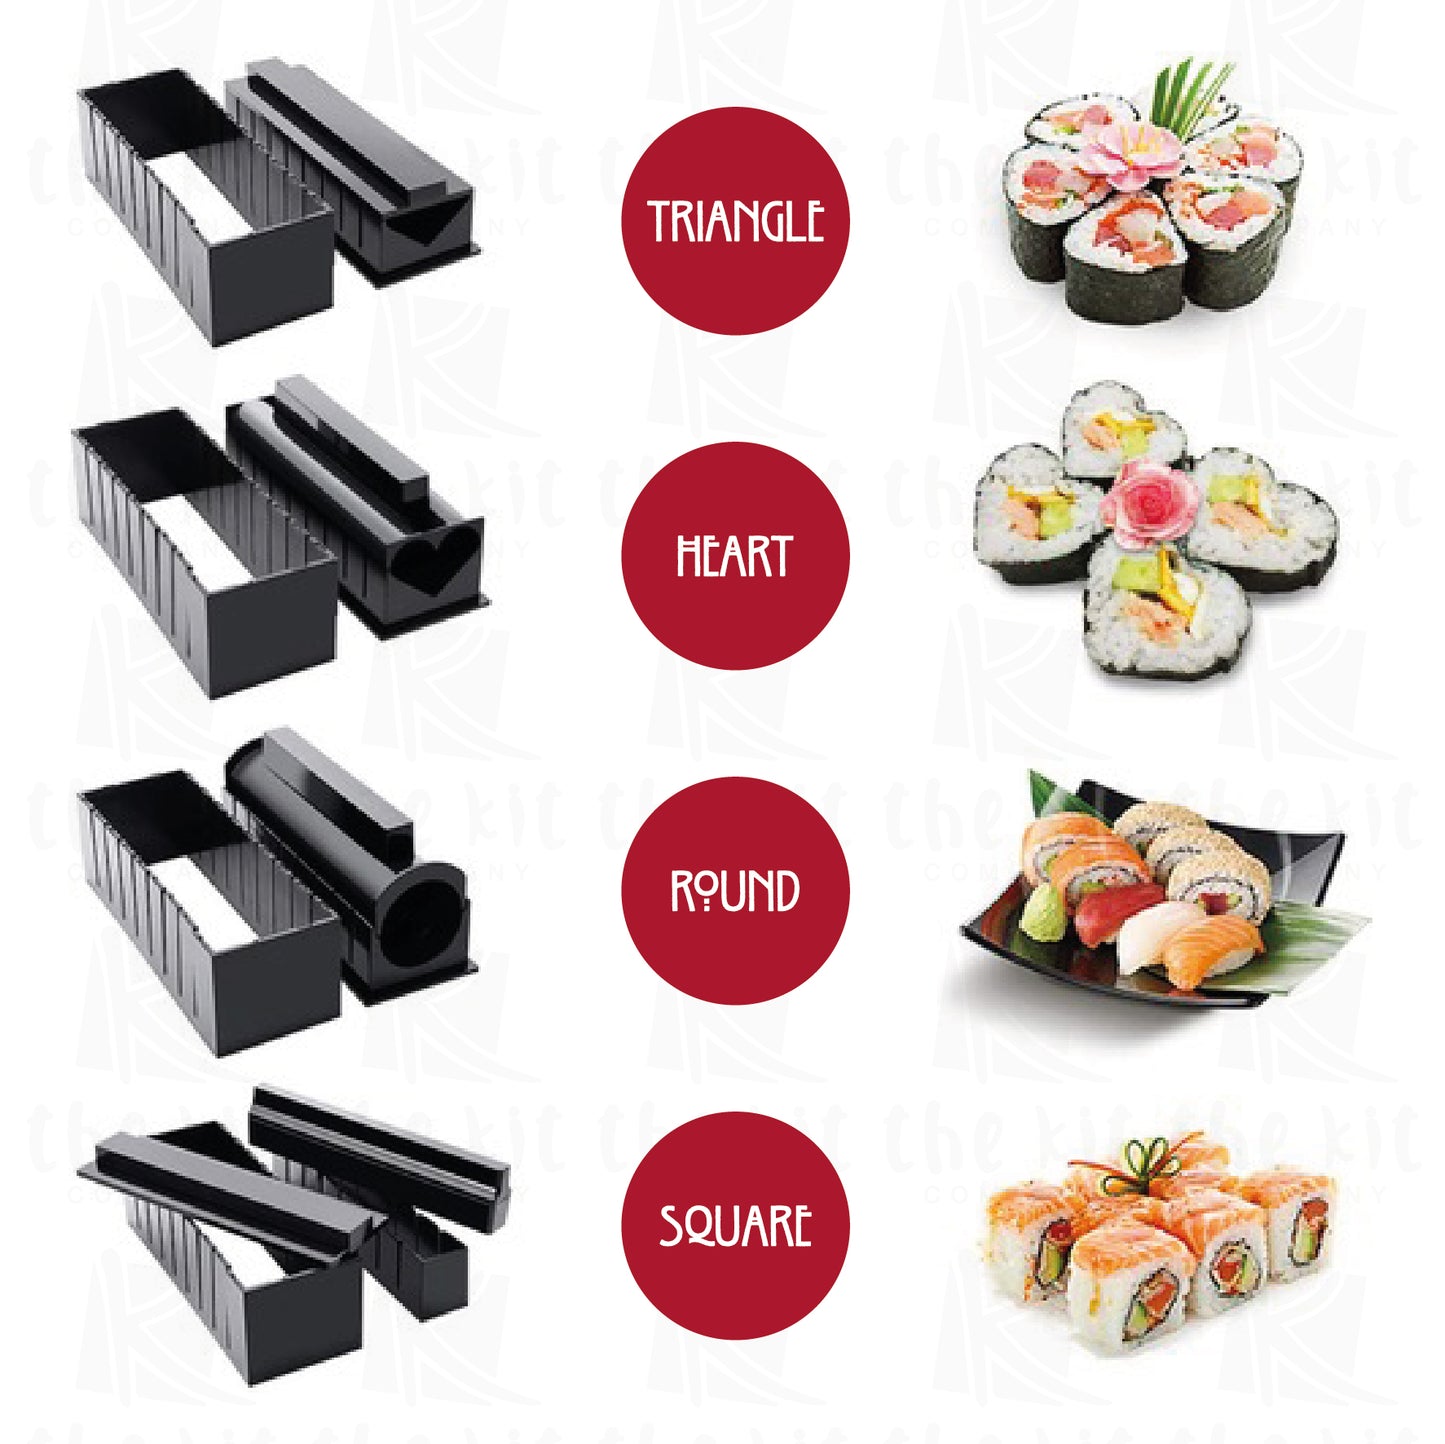 Kit de fabrication pour 25 sushis - Enso